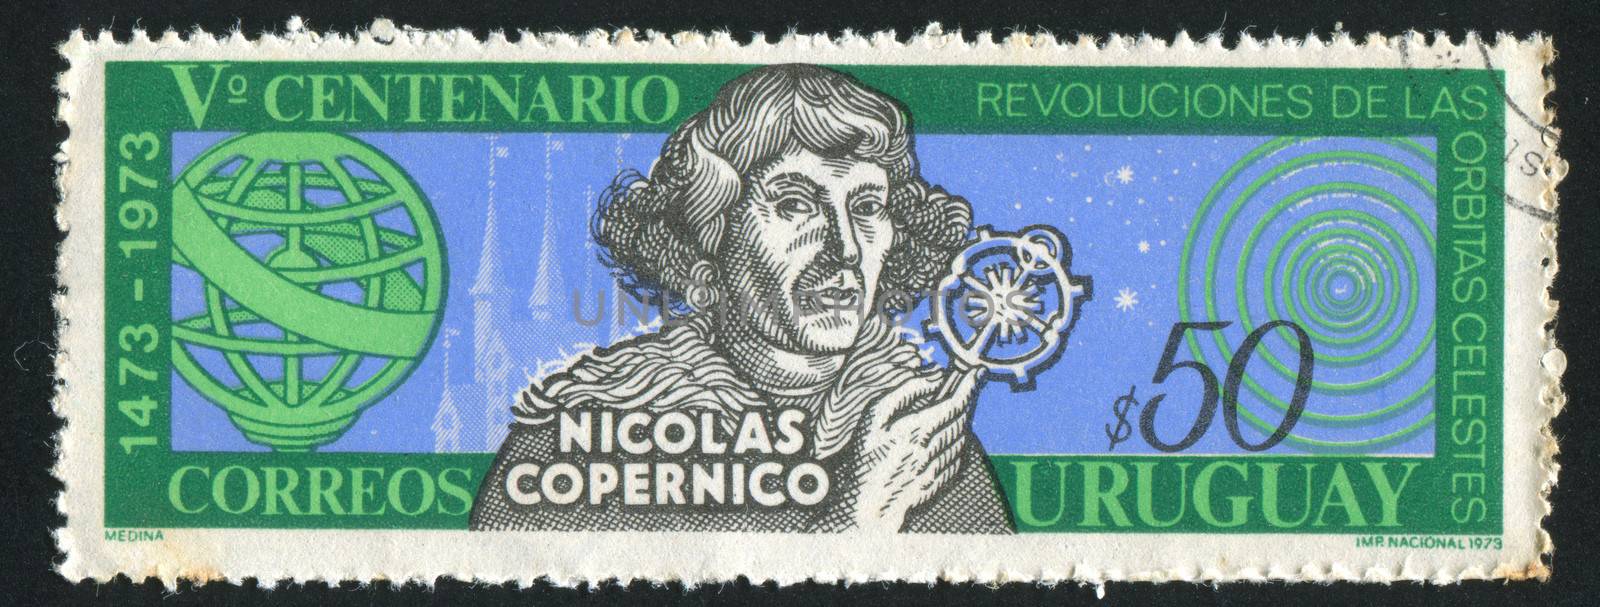 URUGUAY - CIRCA 1973: stamp printed by Uruguay, shows Nicolaus Copernicus, circa 1973